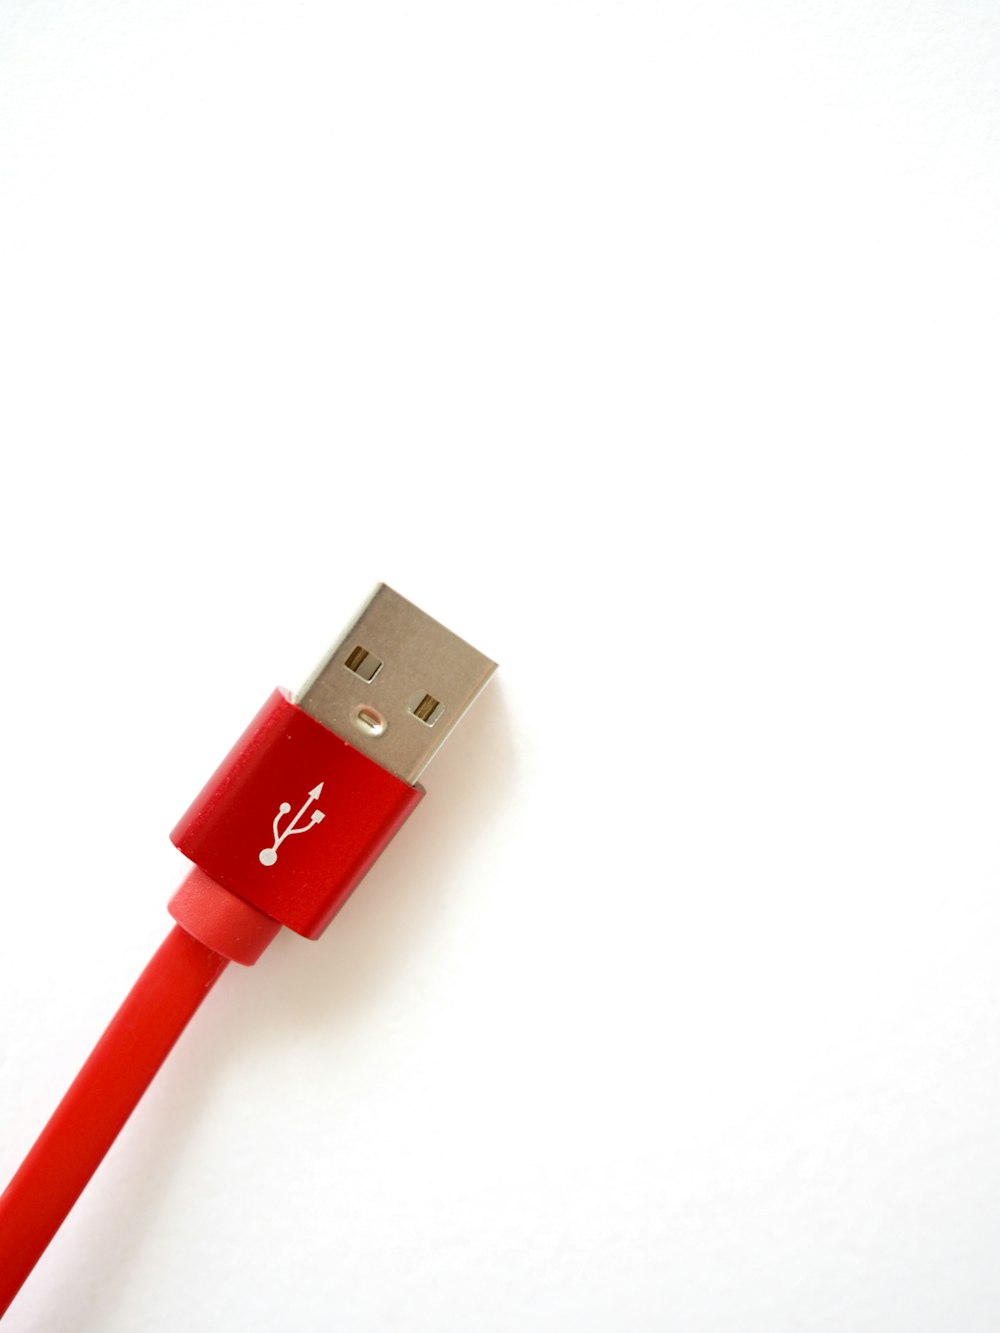 Cable USB rojo sobre superficie blanca